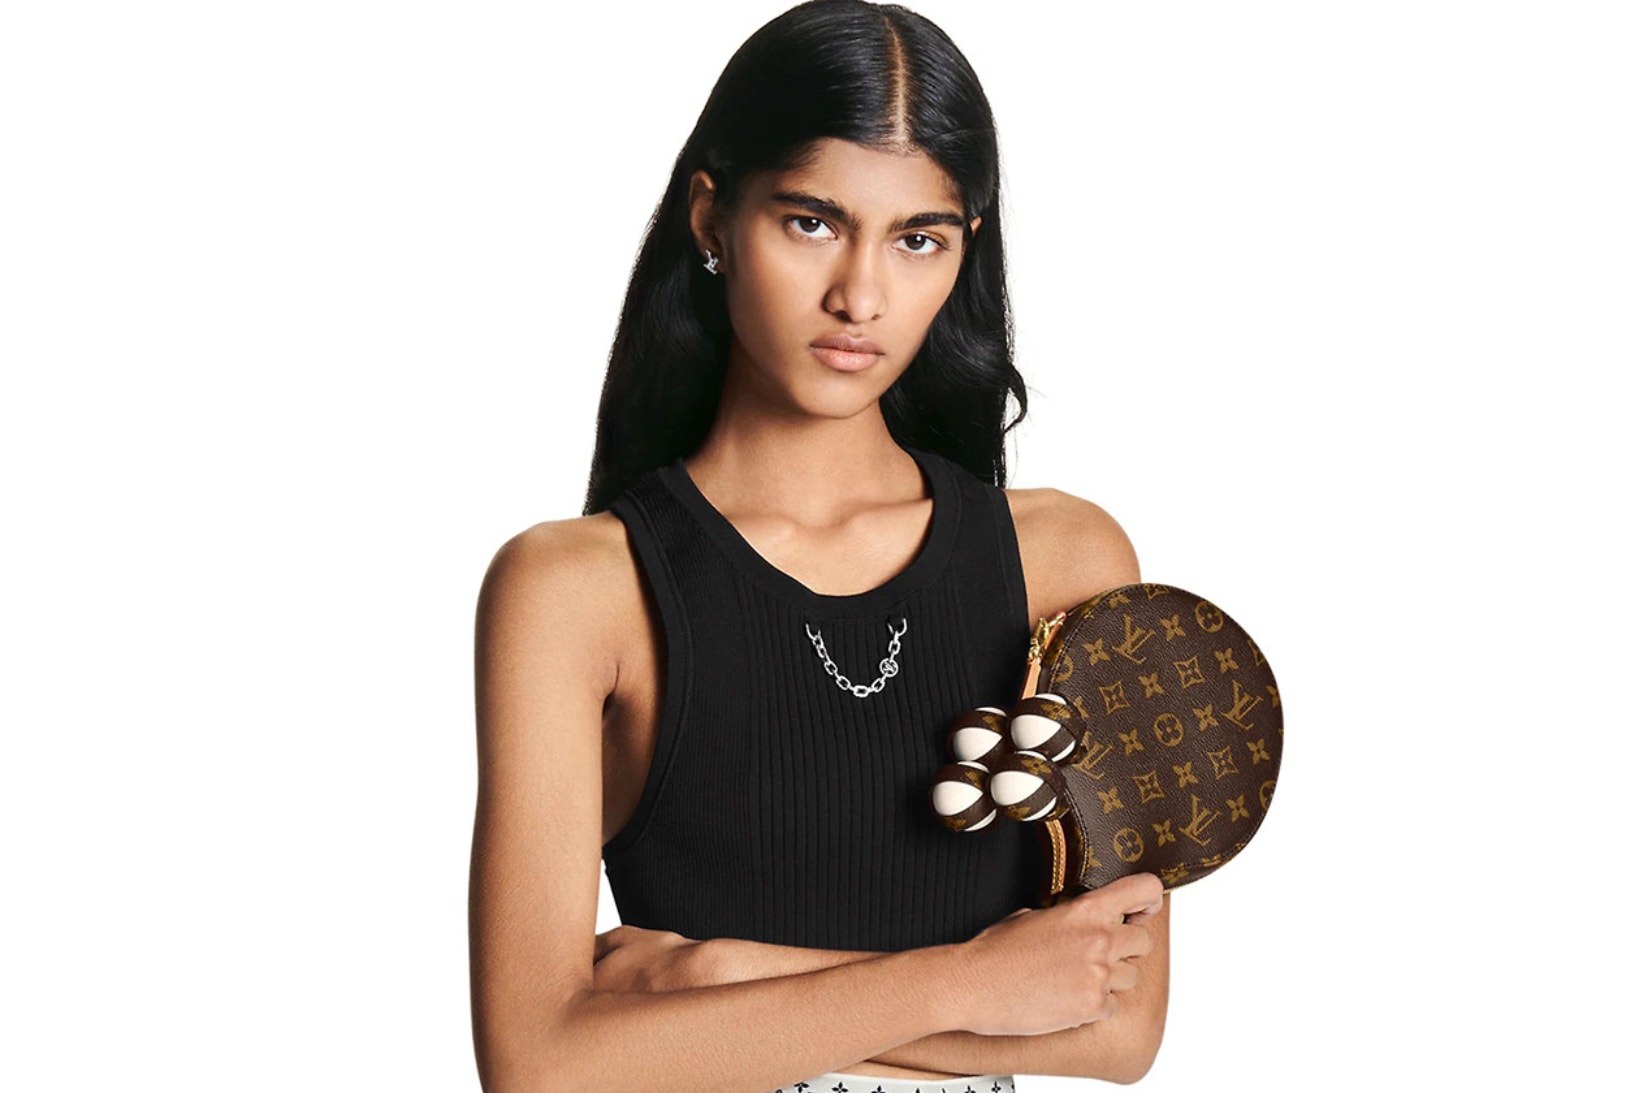 Louis Vuitton lv woman egg bag top handle ball shape handbag